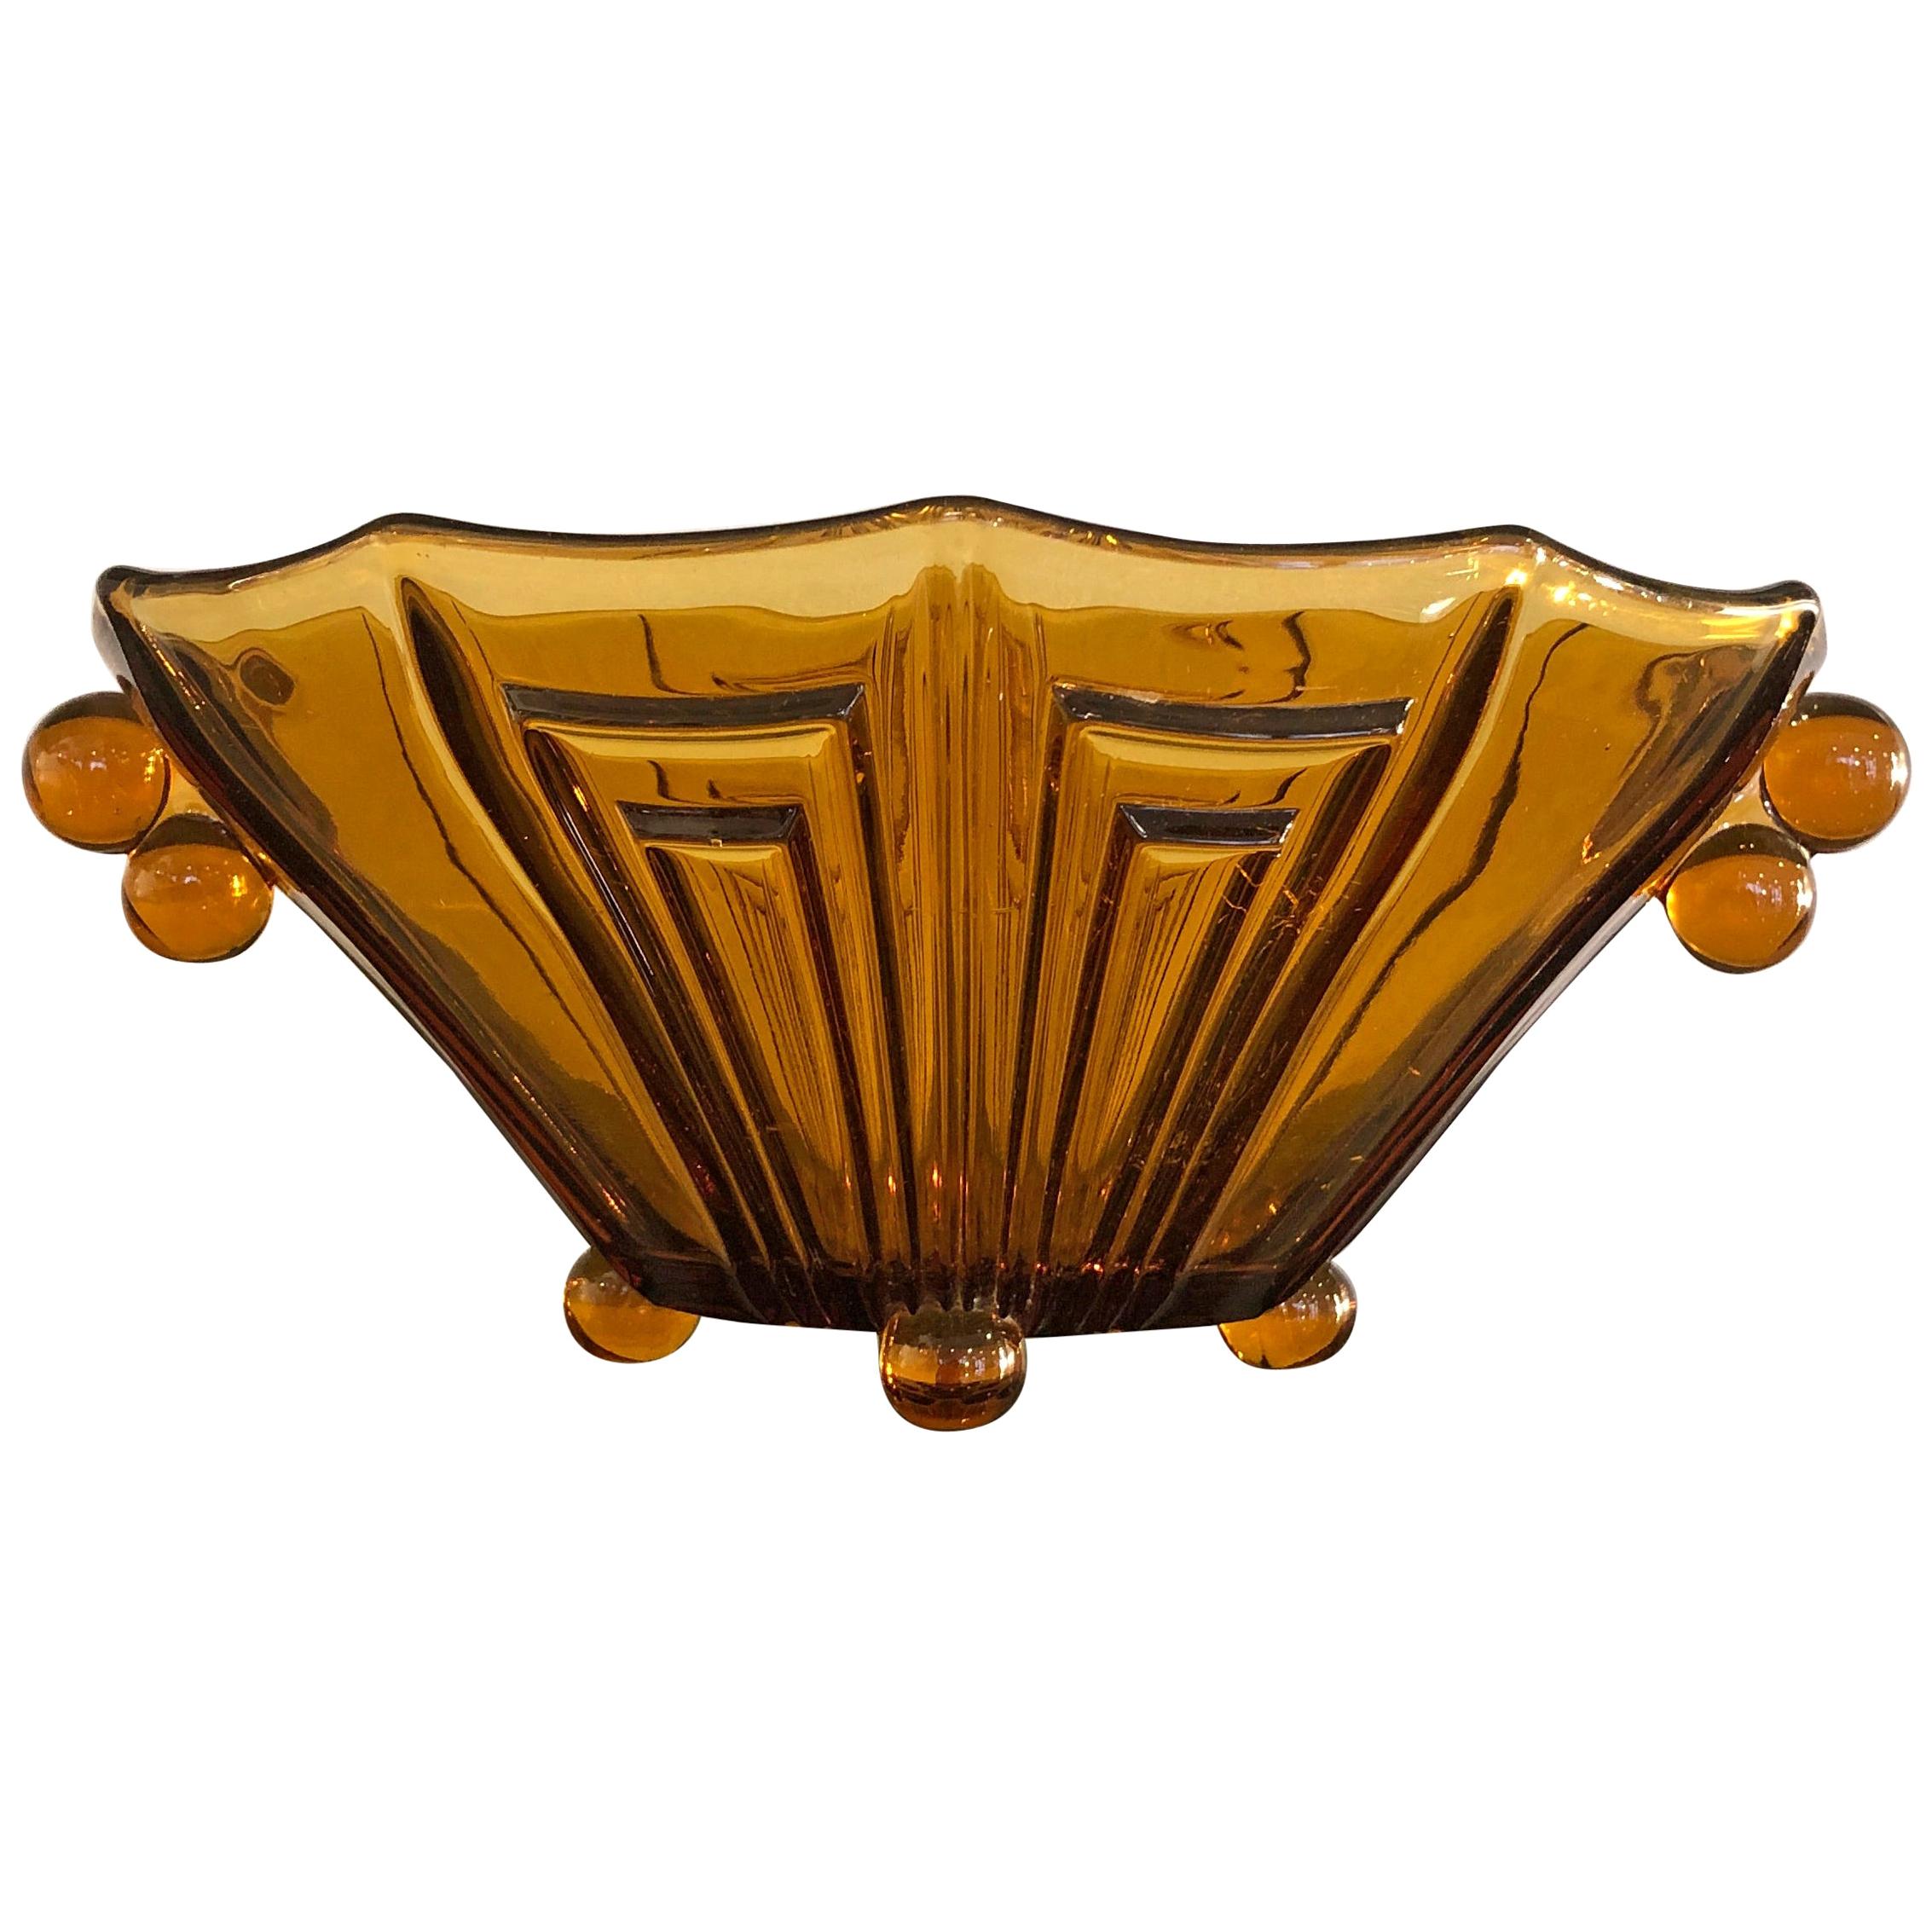 Art Deco Amber Color Thick Glass Decorative Vase Bowl or Centerpiece